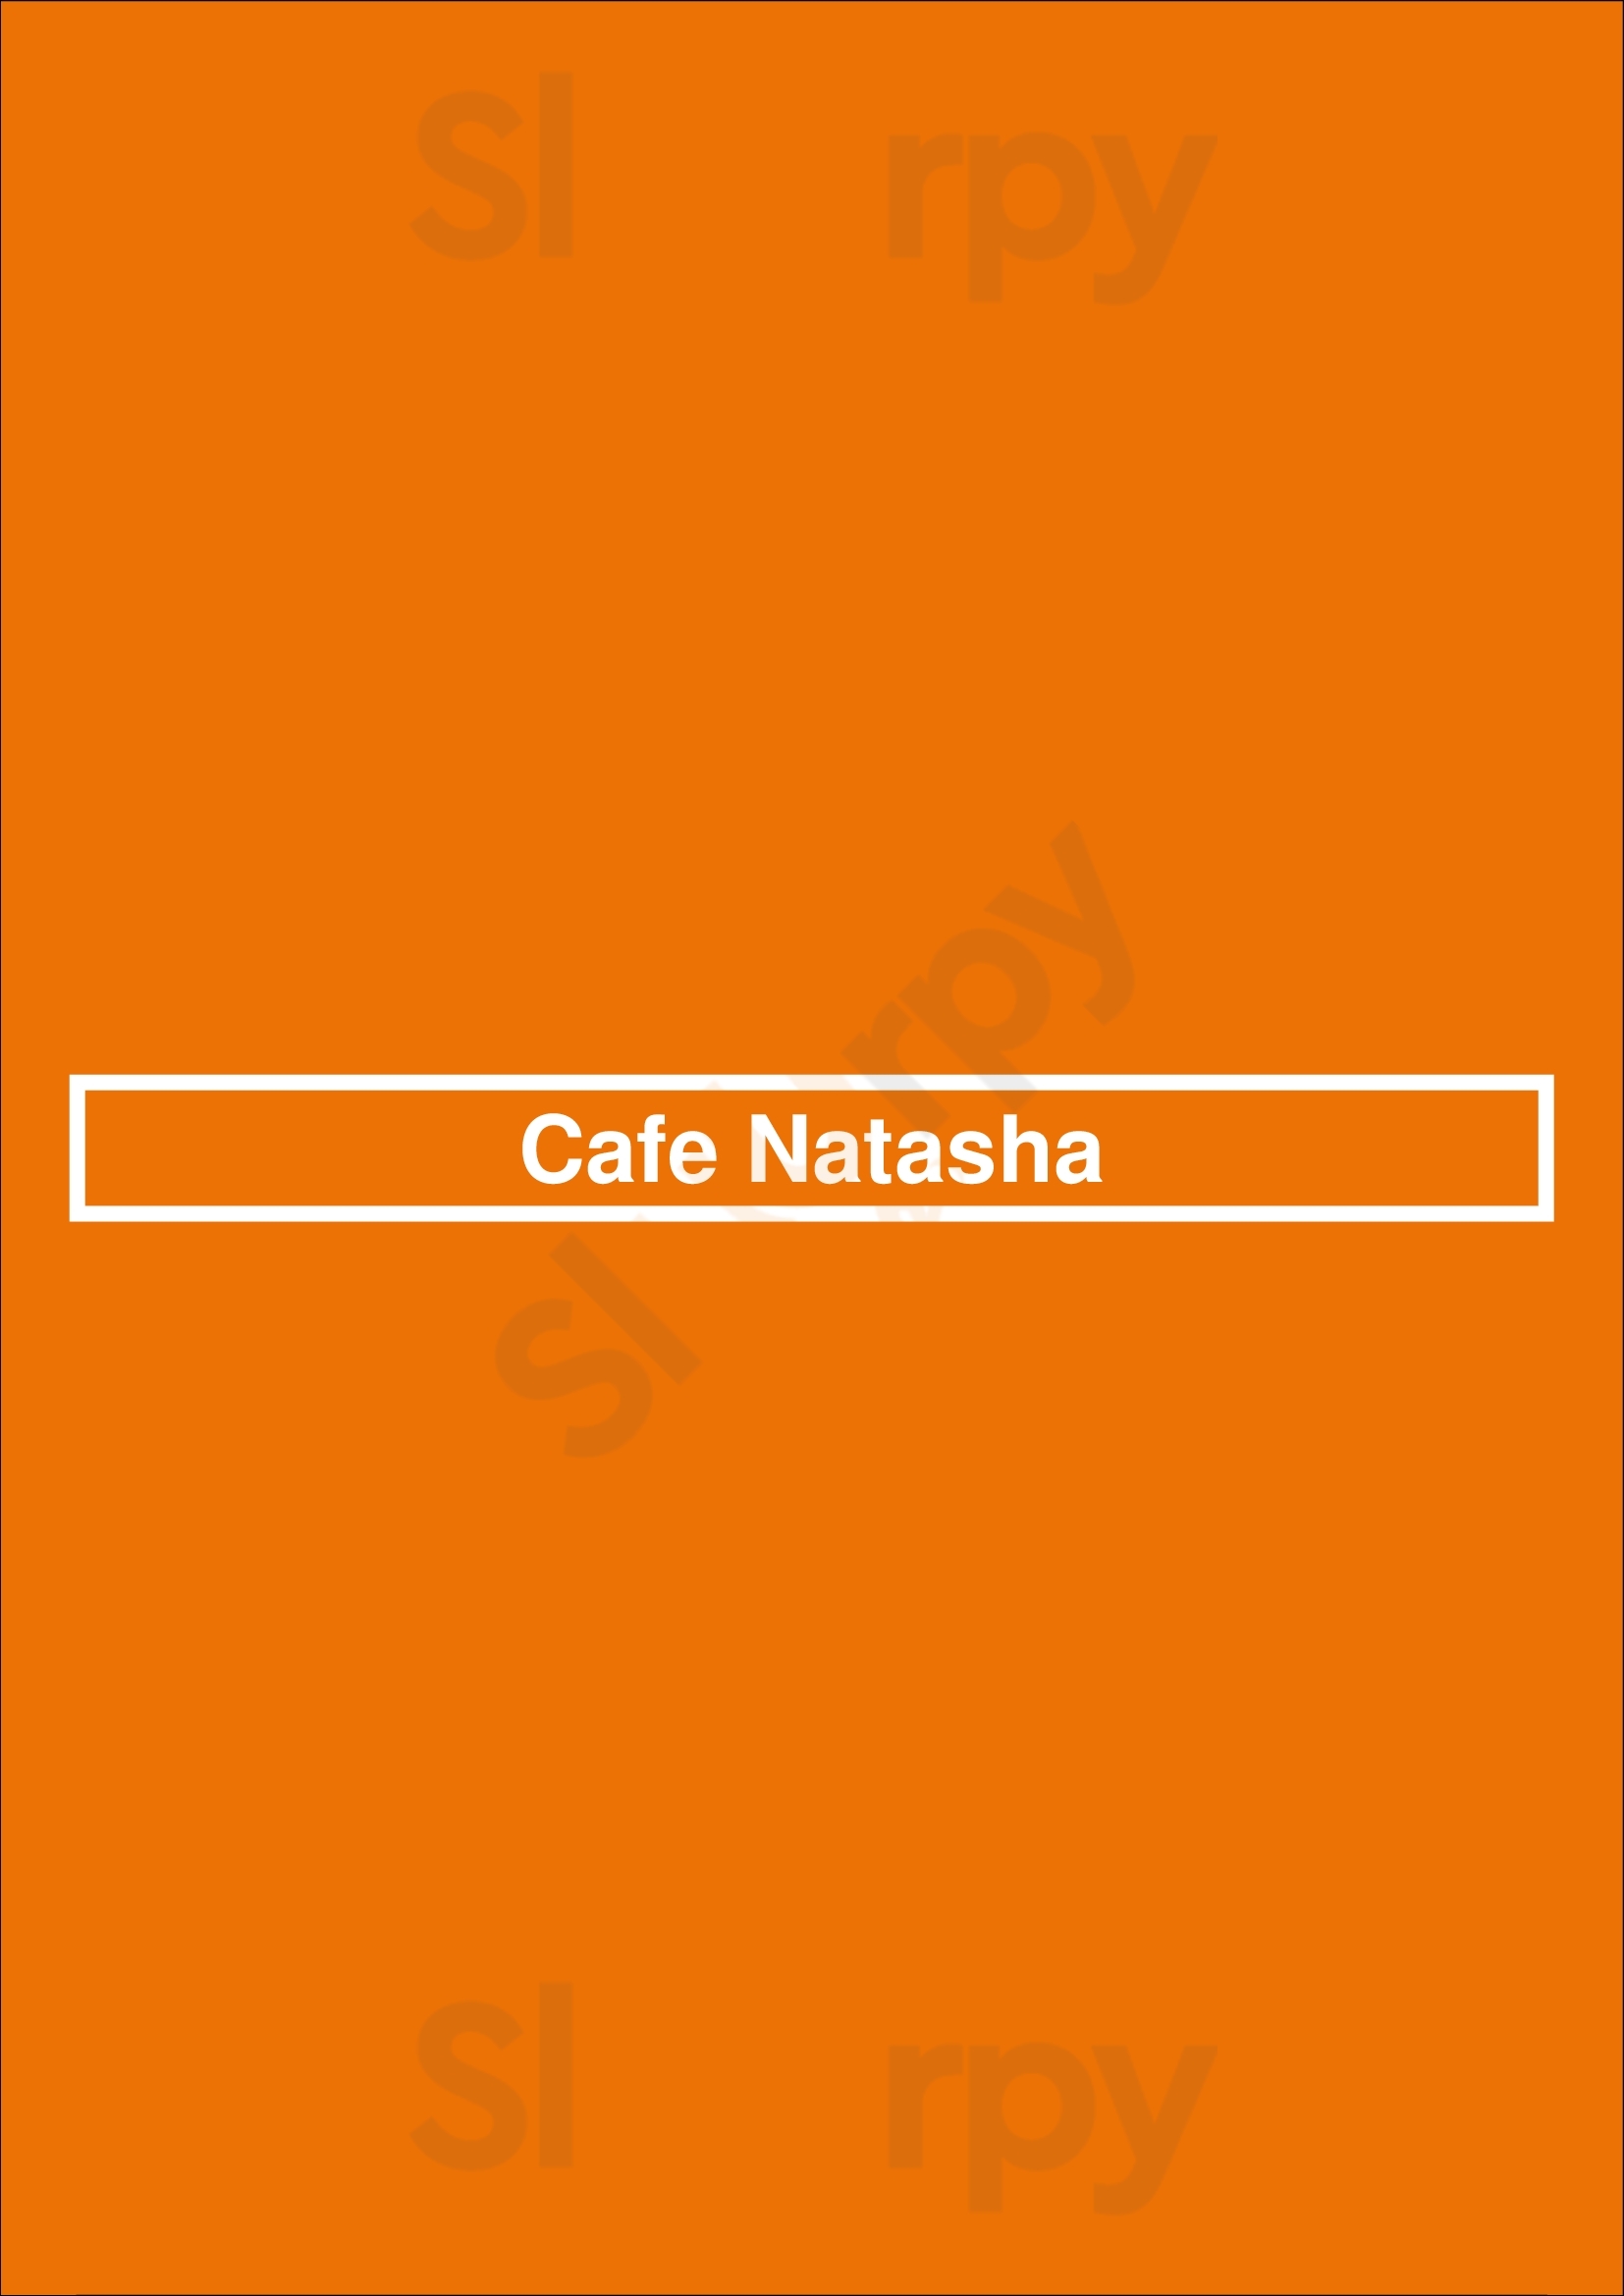 Cafe Natasha Saint Louis Menu - 1